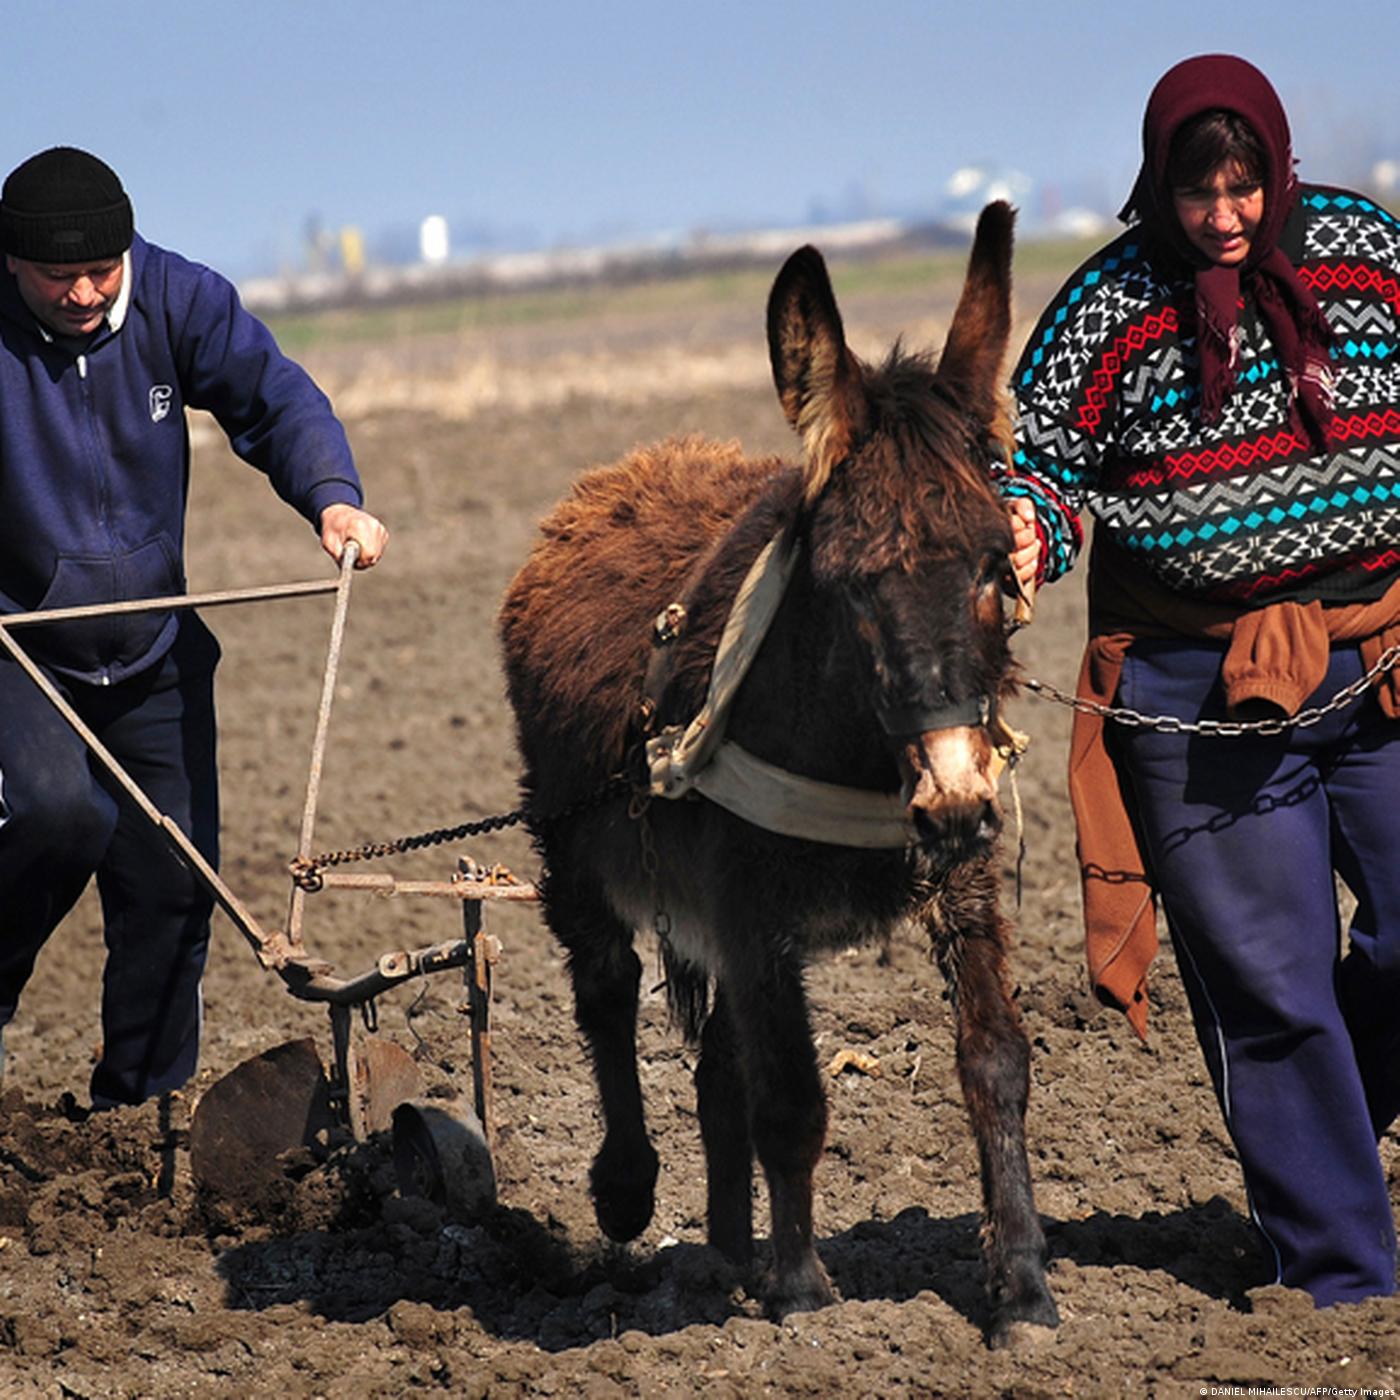 Romania: Small Farmers Feeling the Squeeze